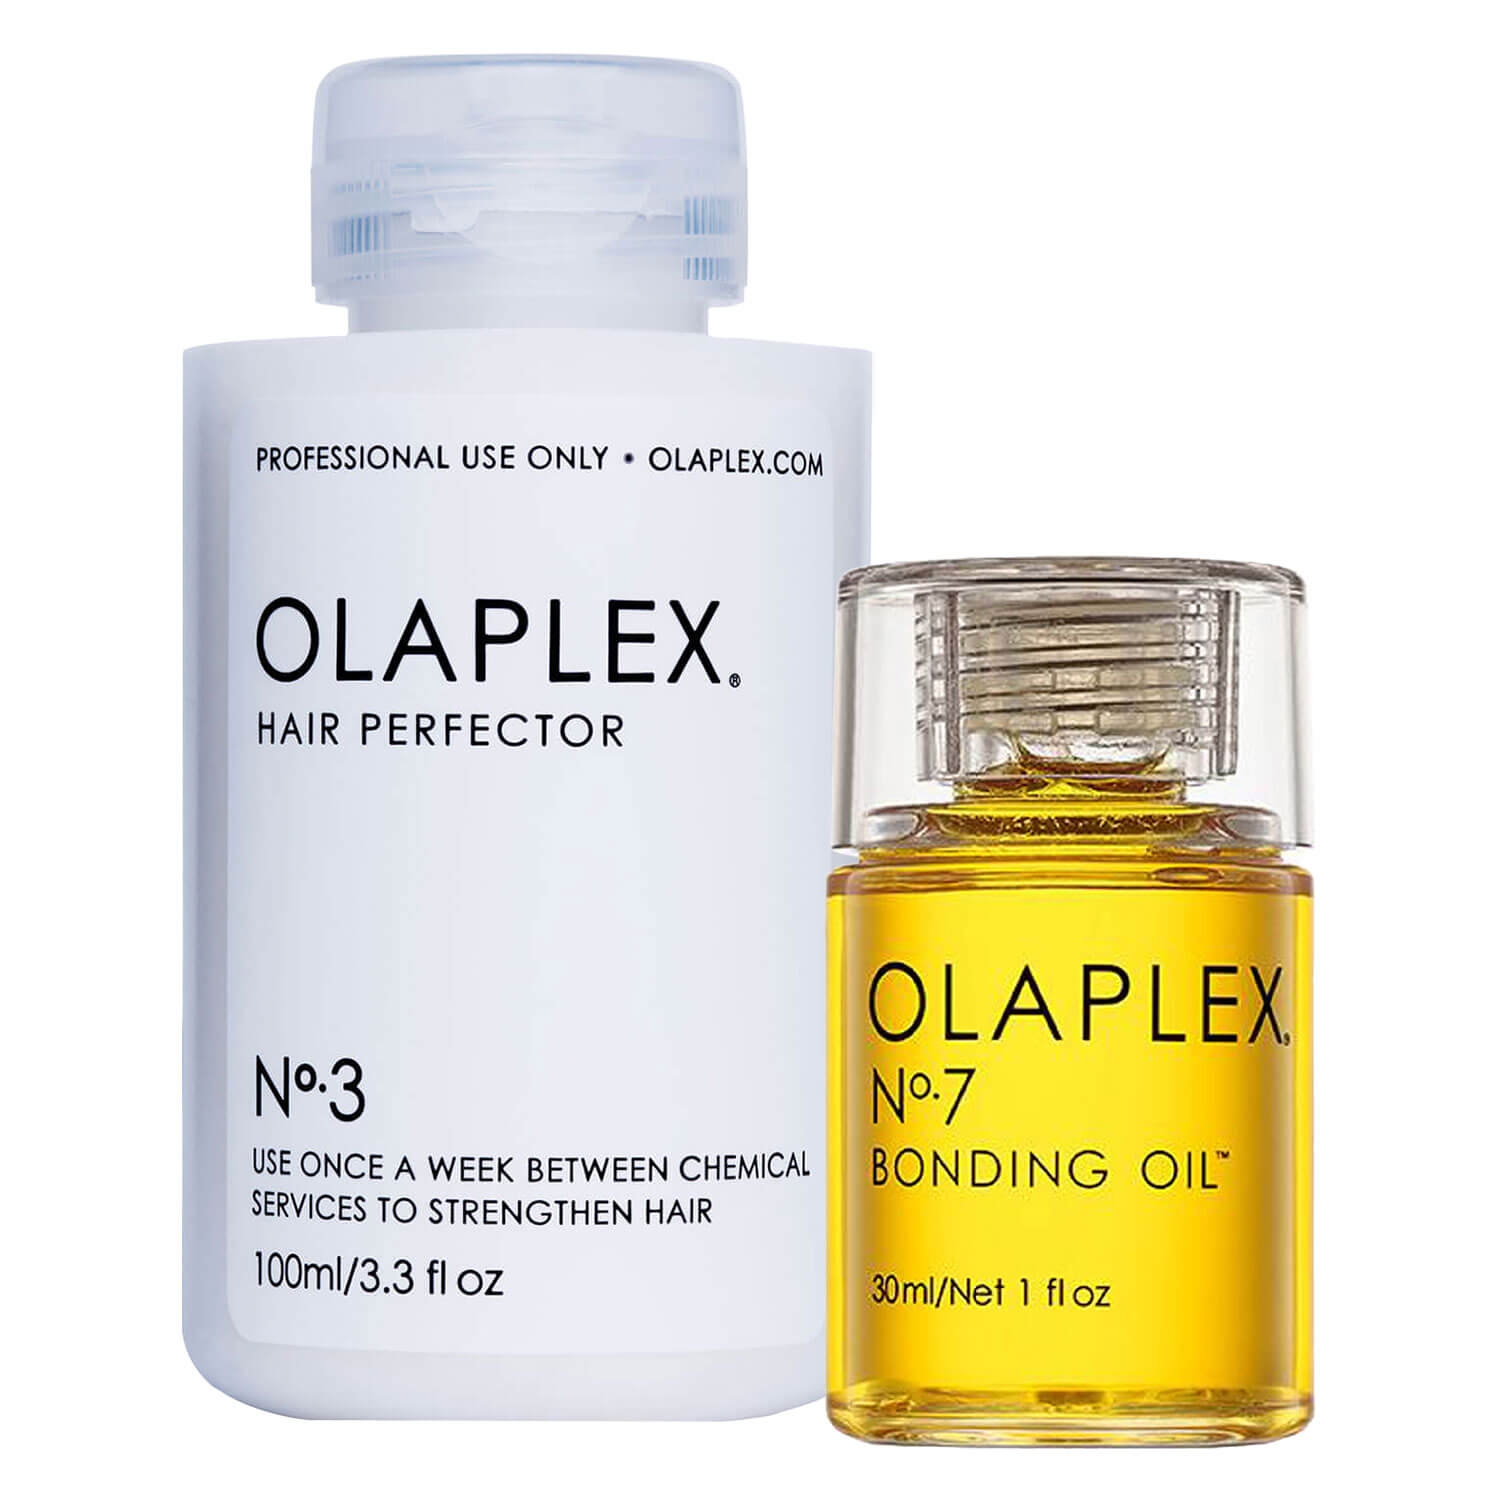 Product image from Olaplex - Bonding Oil No. 7 + Olaplex - Hair Perfector No. 3 Special